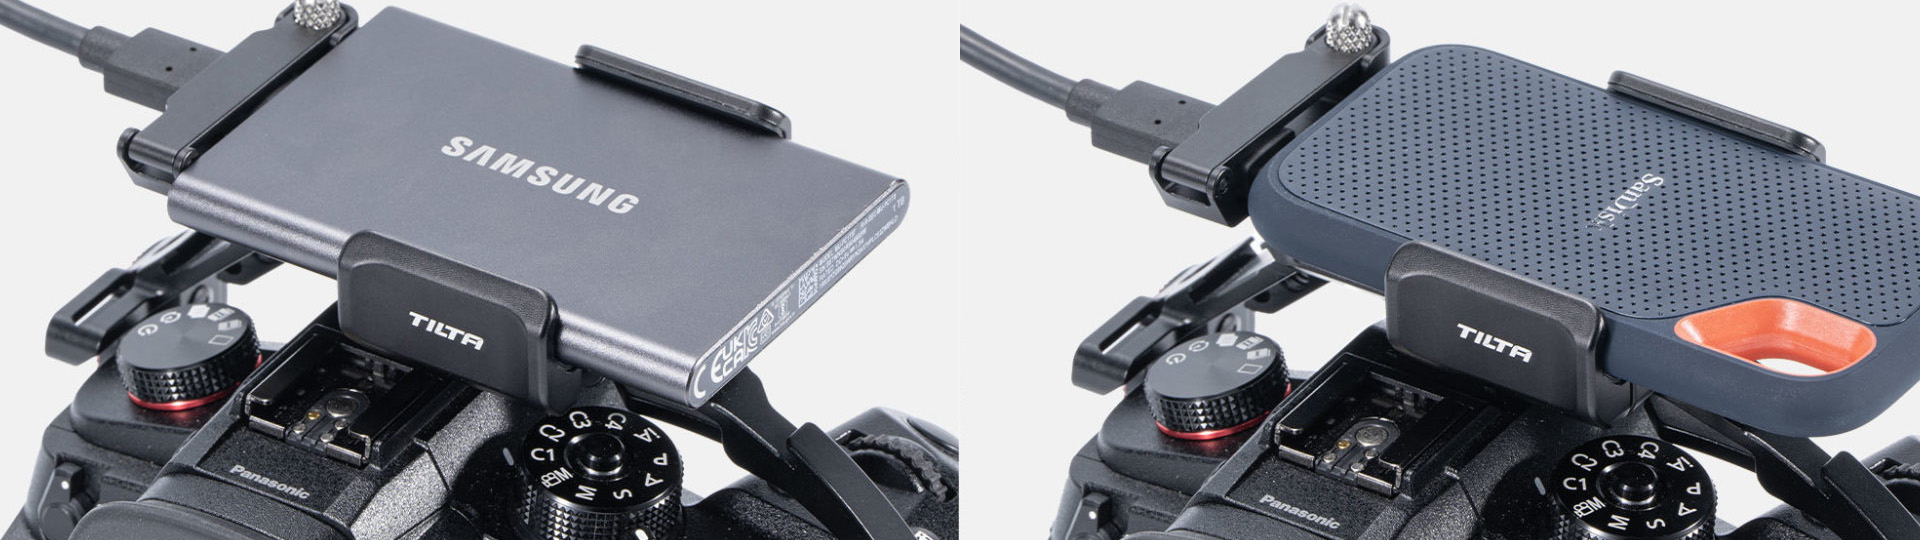 8Sinn SSD Holder for Samsung T5 on 15mm Rod Mount - MAVIS Foto & Video